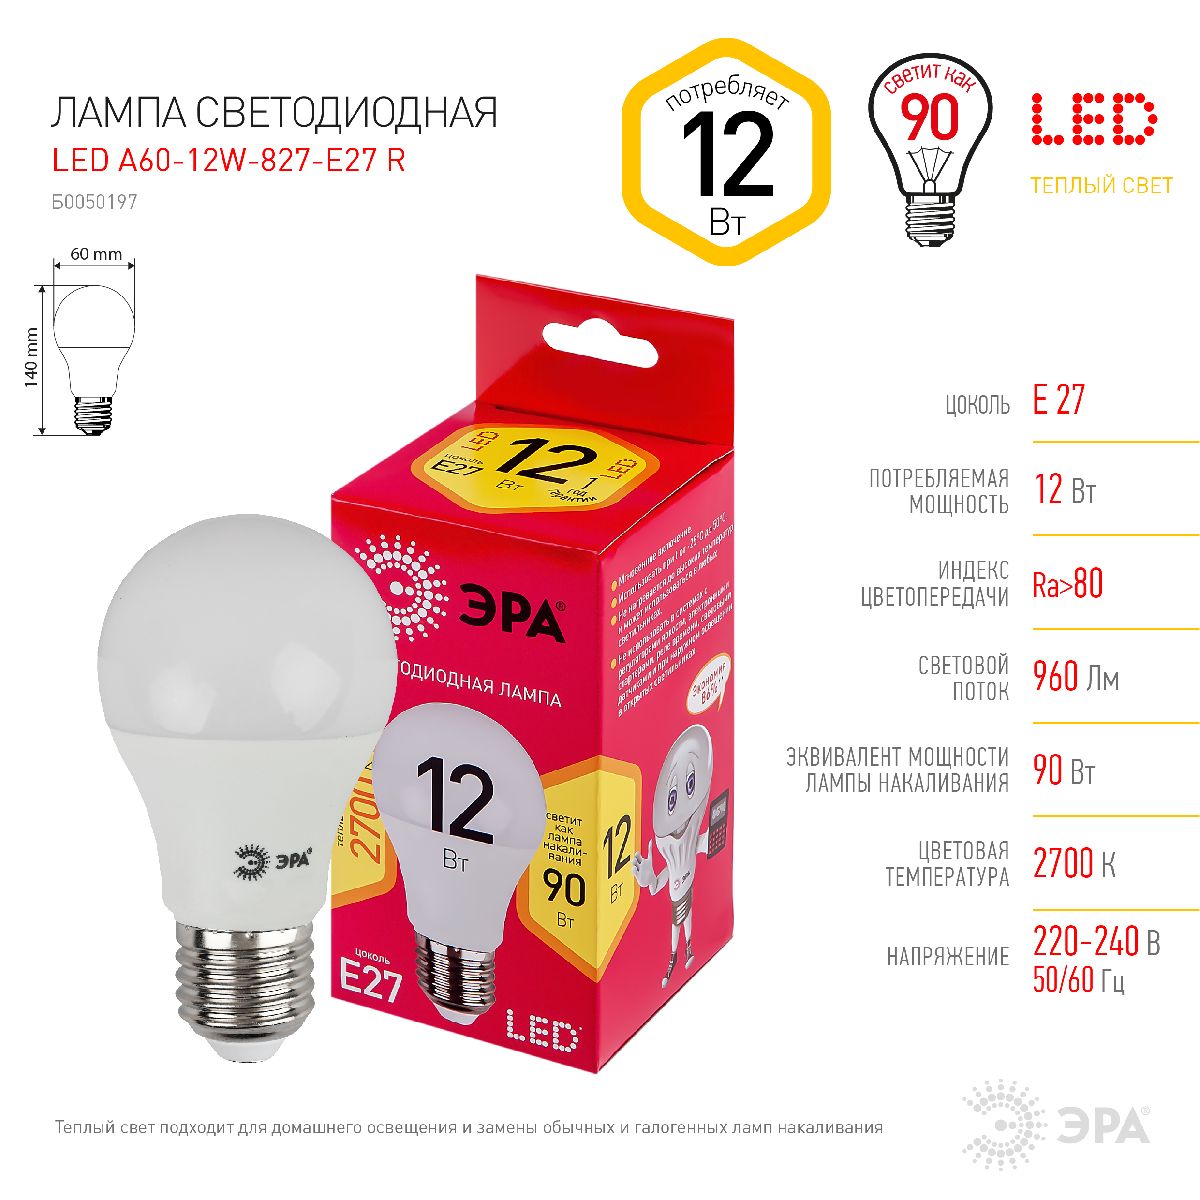 Лампа светодиодная Эра E27 12W 2700K LED A60-12W-827-E27 R Б0050197